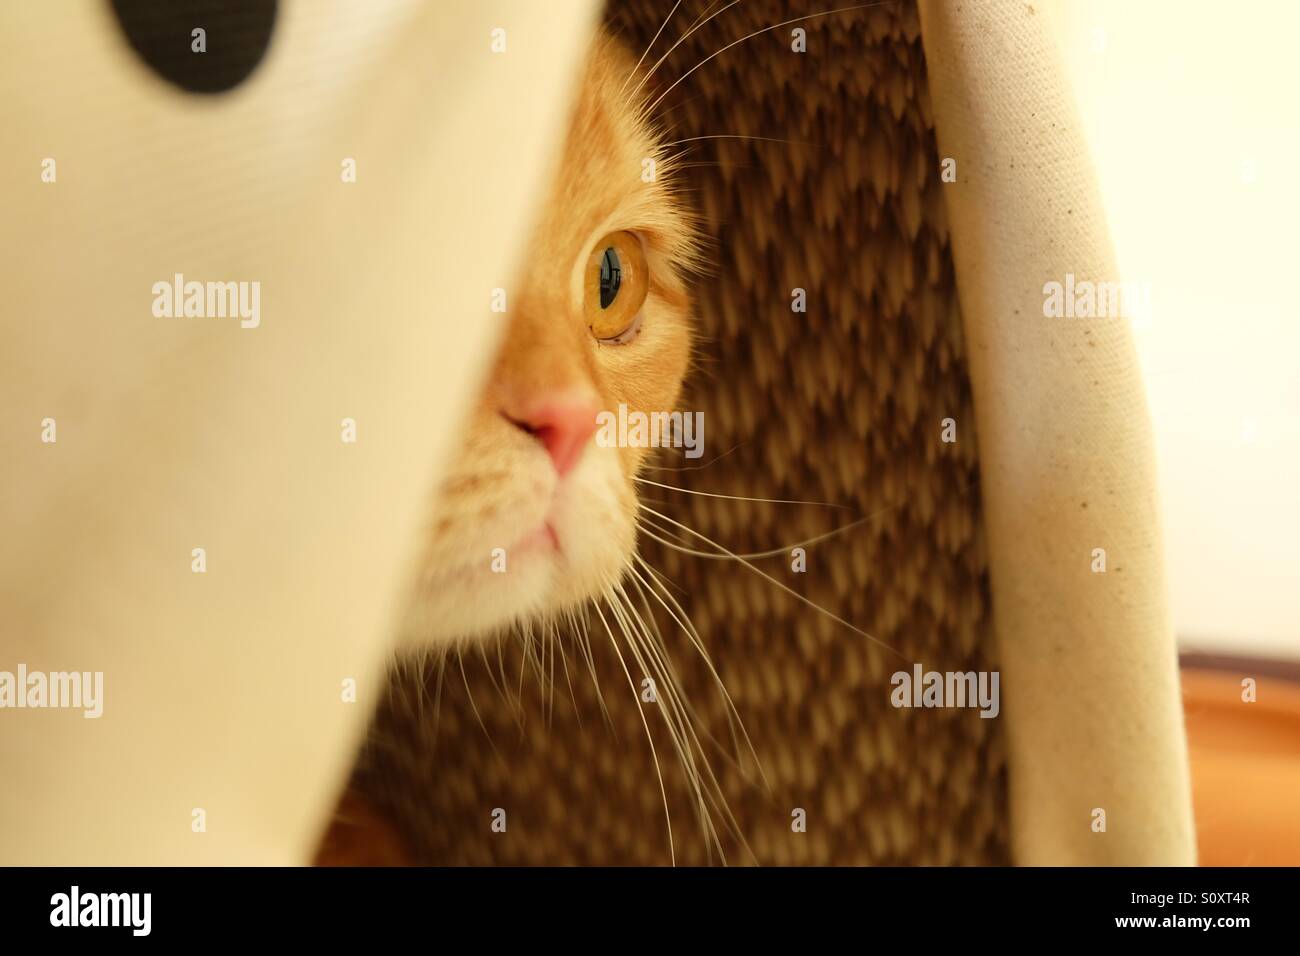 A marmalade cat staring at something Stock Photo